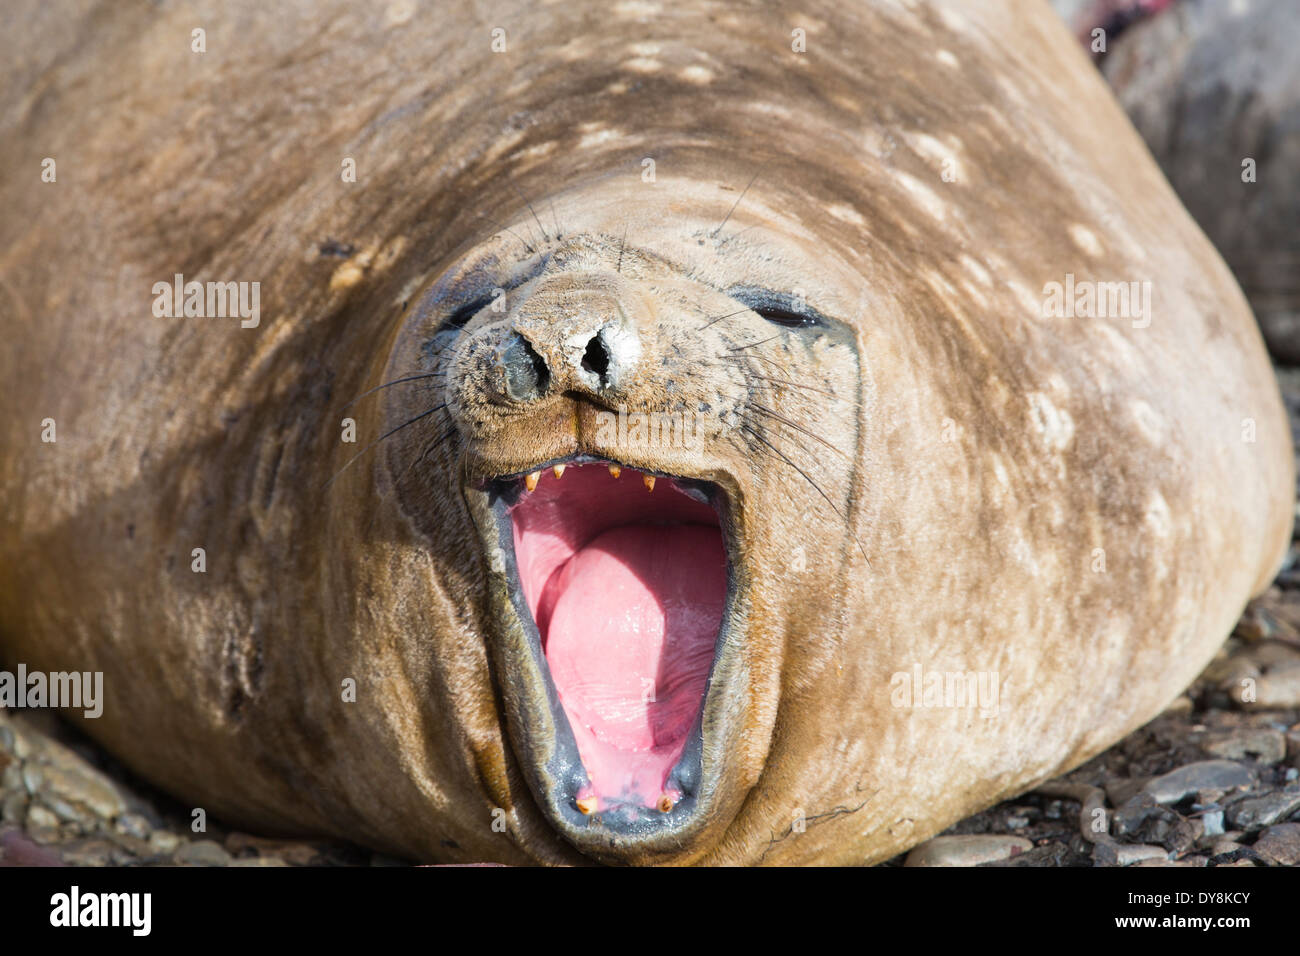 Southern Elephant Seal; Mirounga leonina, on Prion Island, South Georgia, Antarctica, yawning, Stock Photo